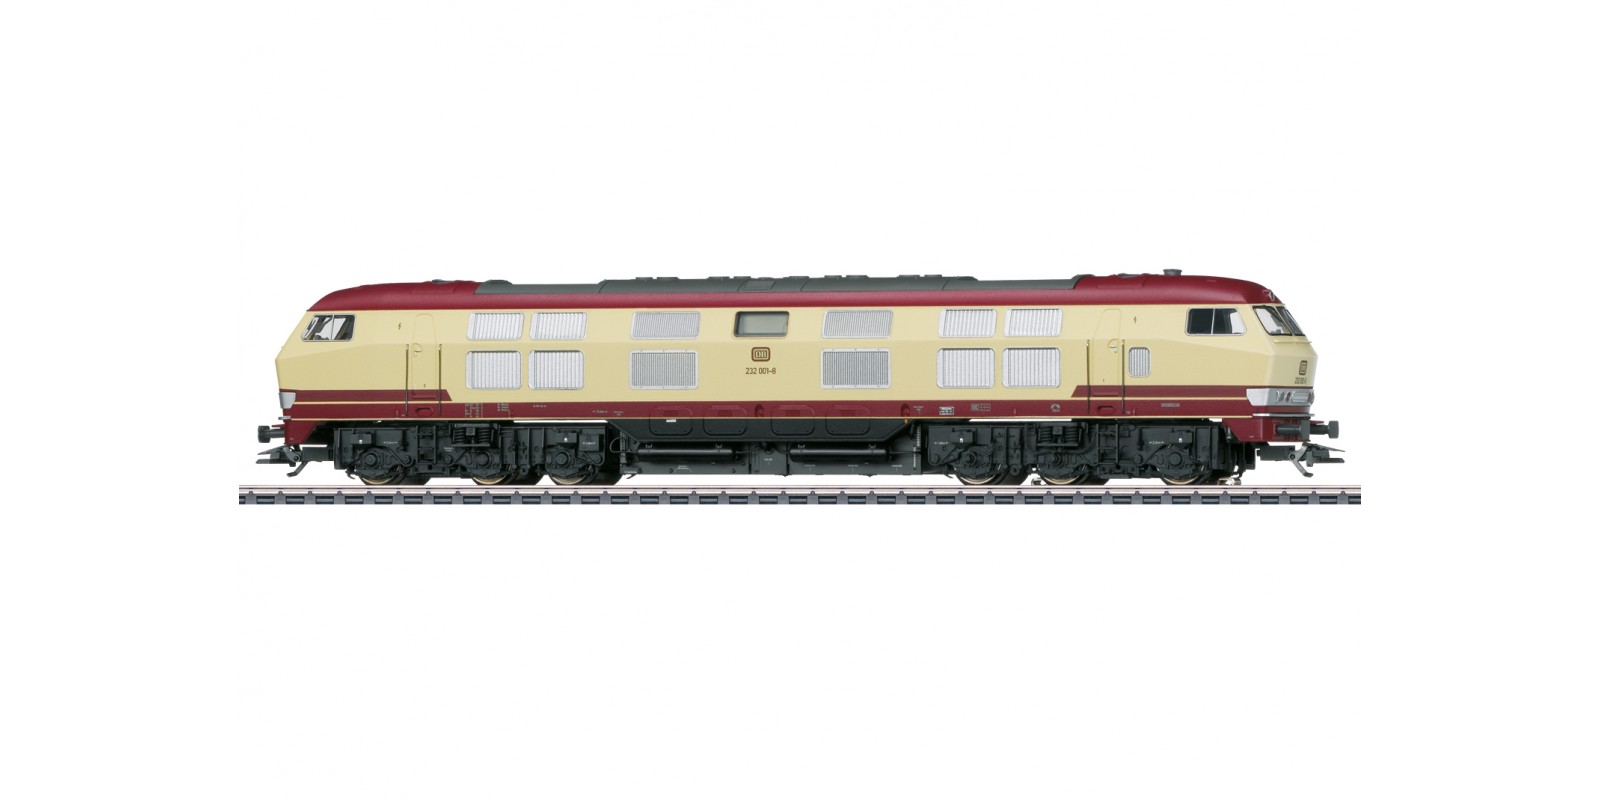 39322 Class 232 Diesel Locomotive